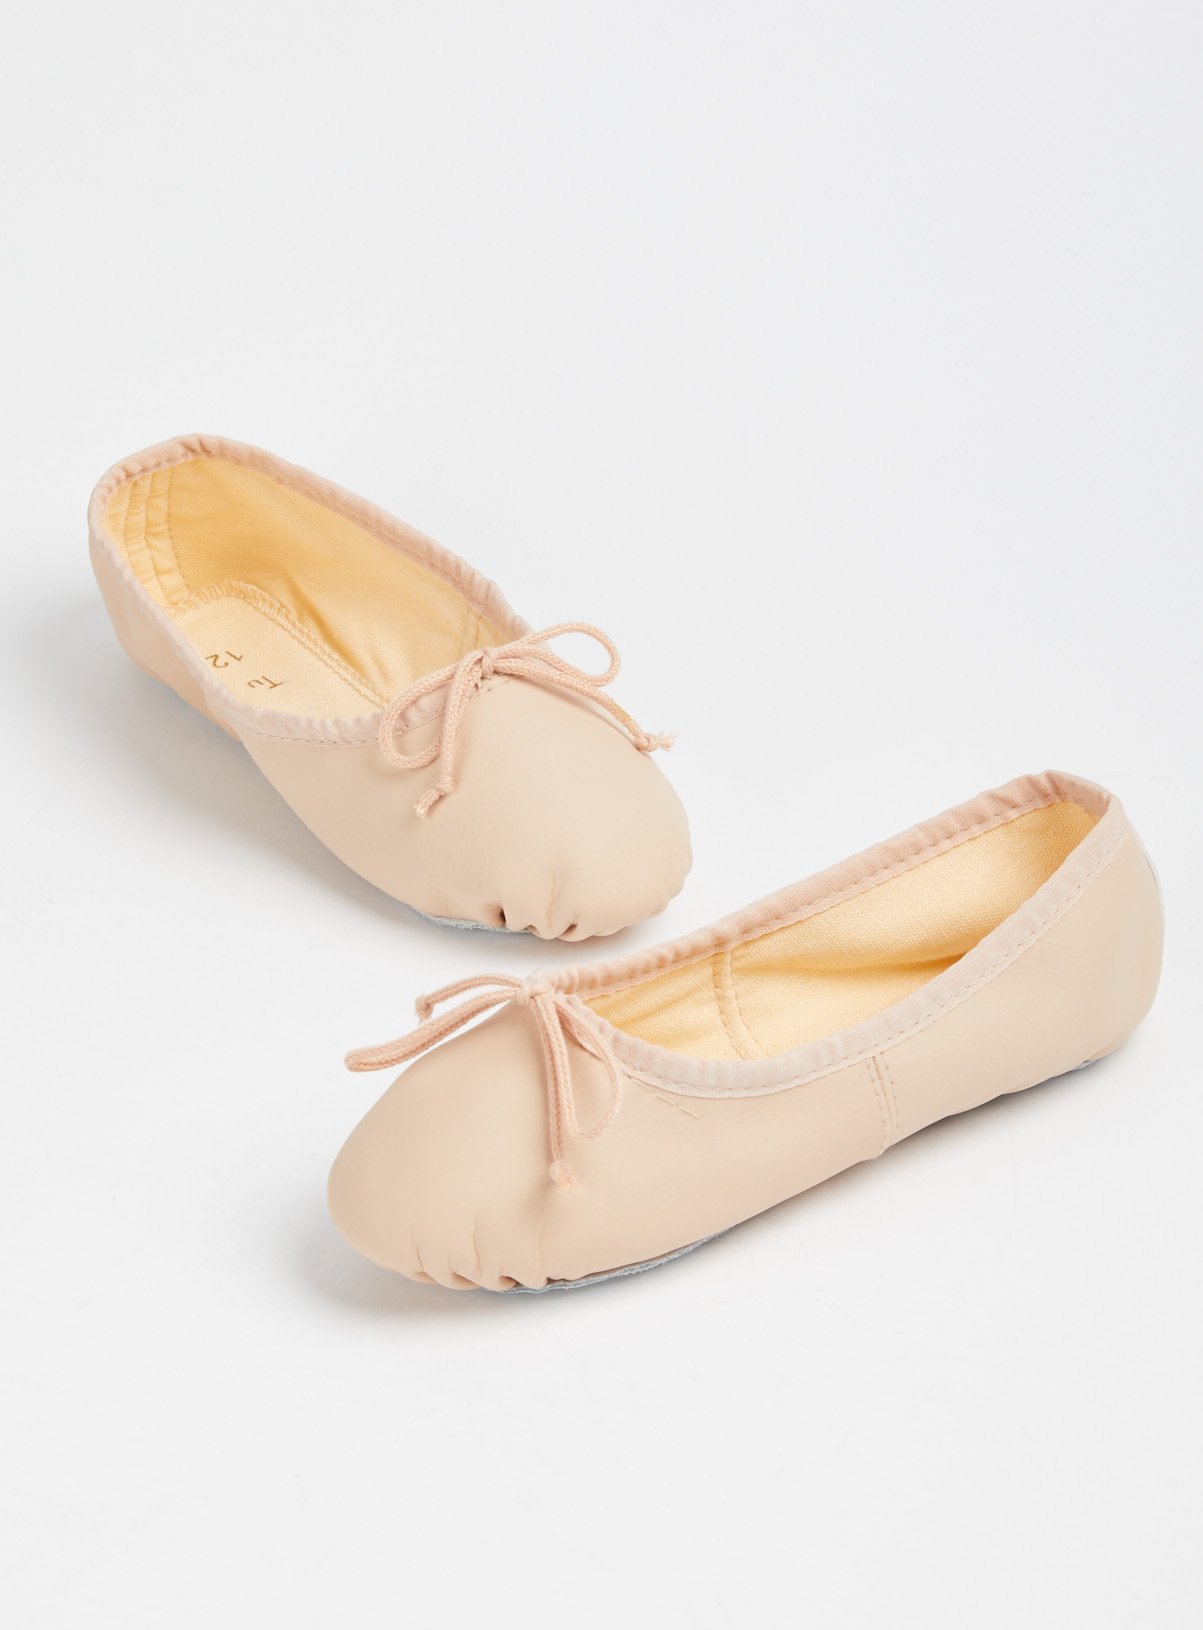 buy ballet shoes